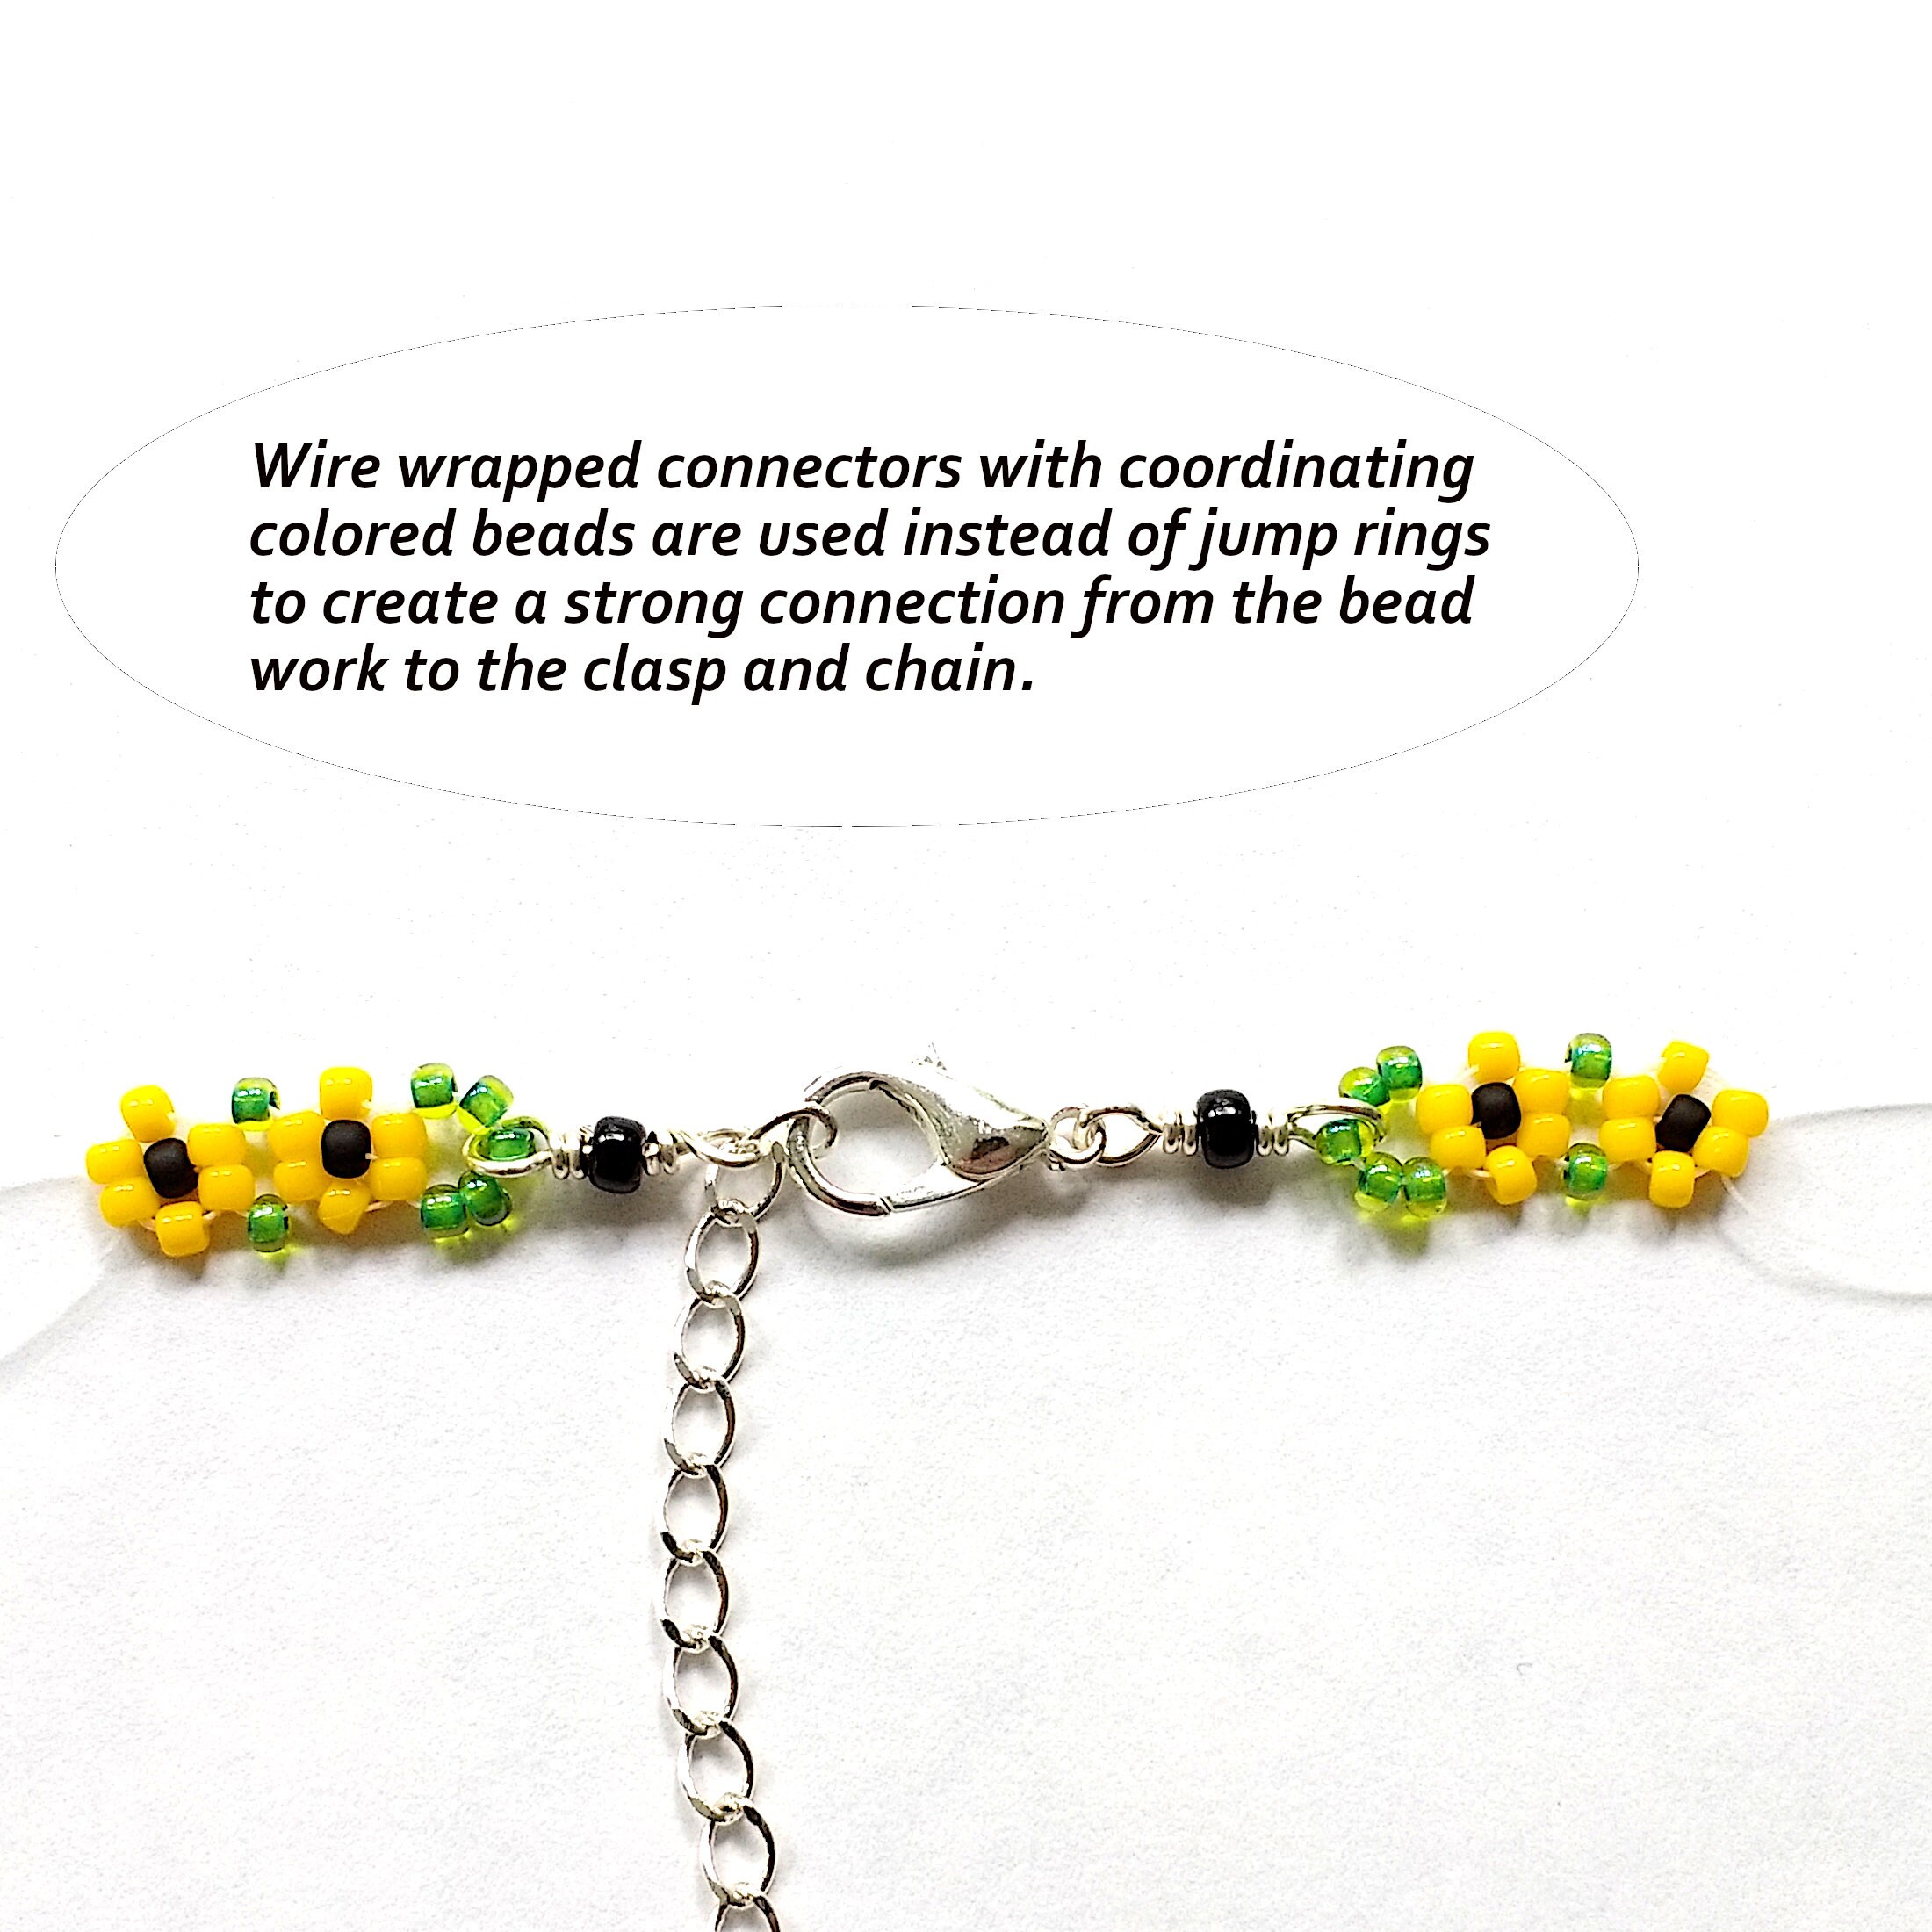 Bulk Daisy Flower Trio Seed Bead Bracelet - Choose Your Favorite String Color! 500 Bracelets (-50%)